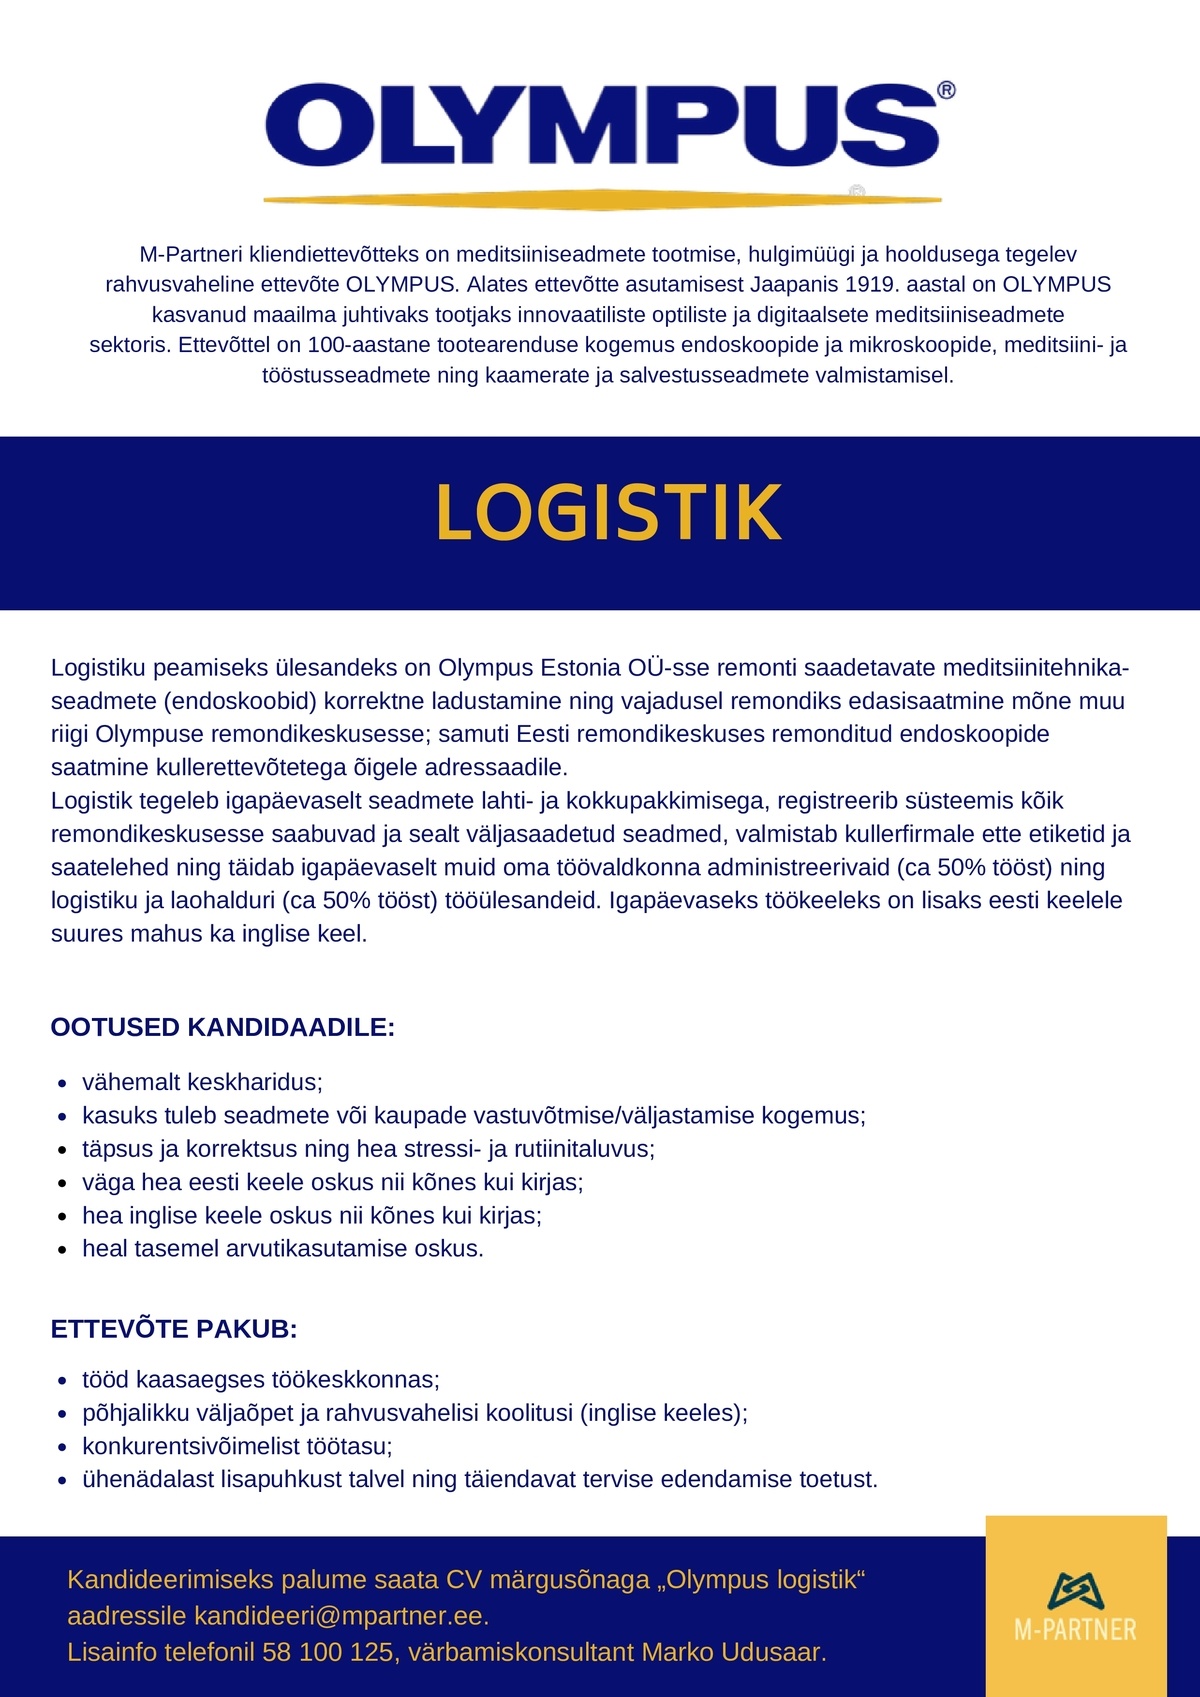 M-Partner HR OÜ Logistik (Olympus)